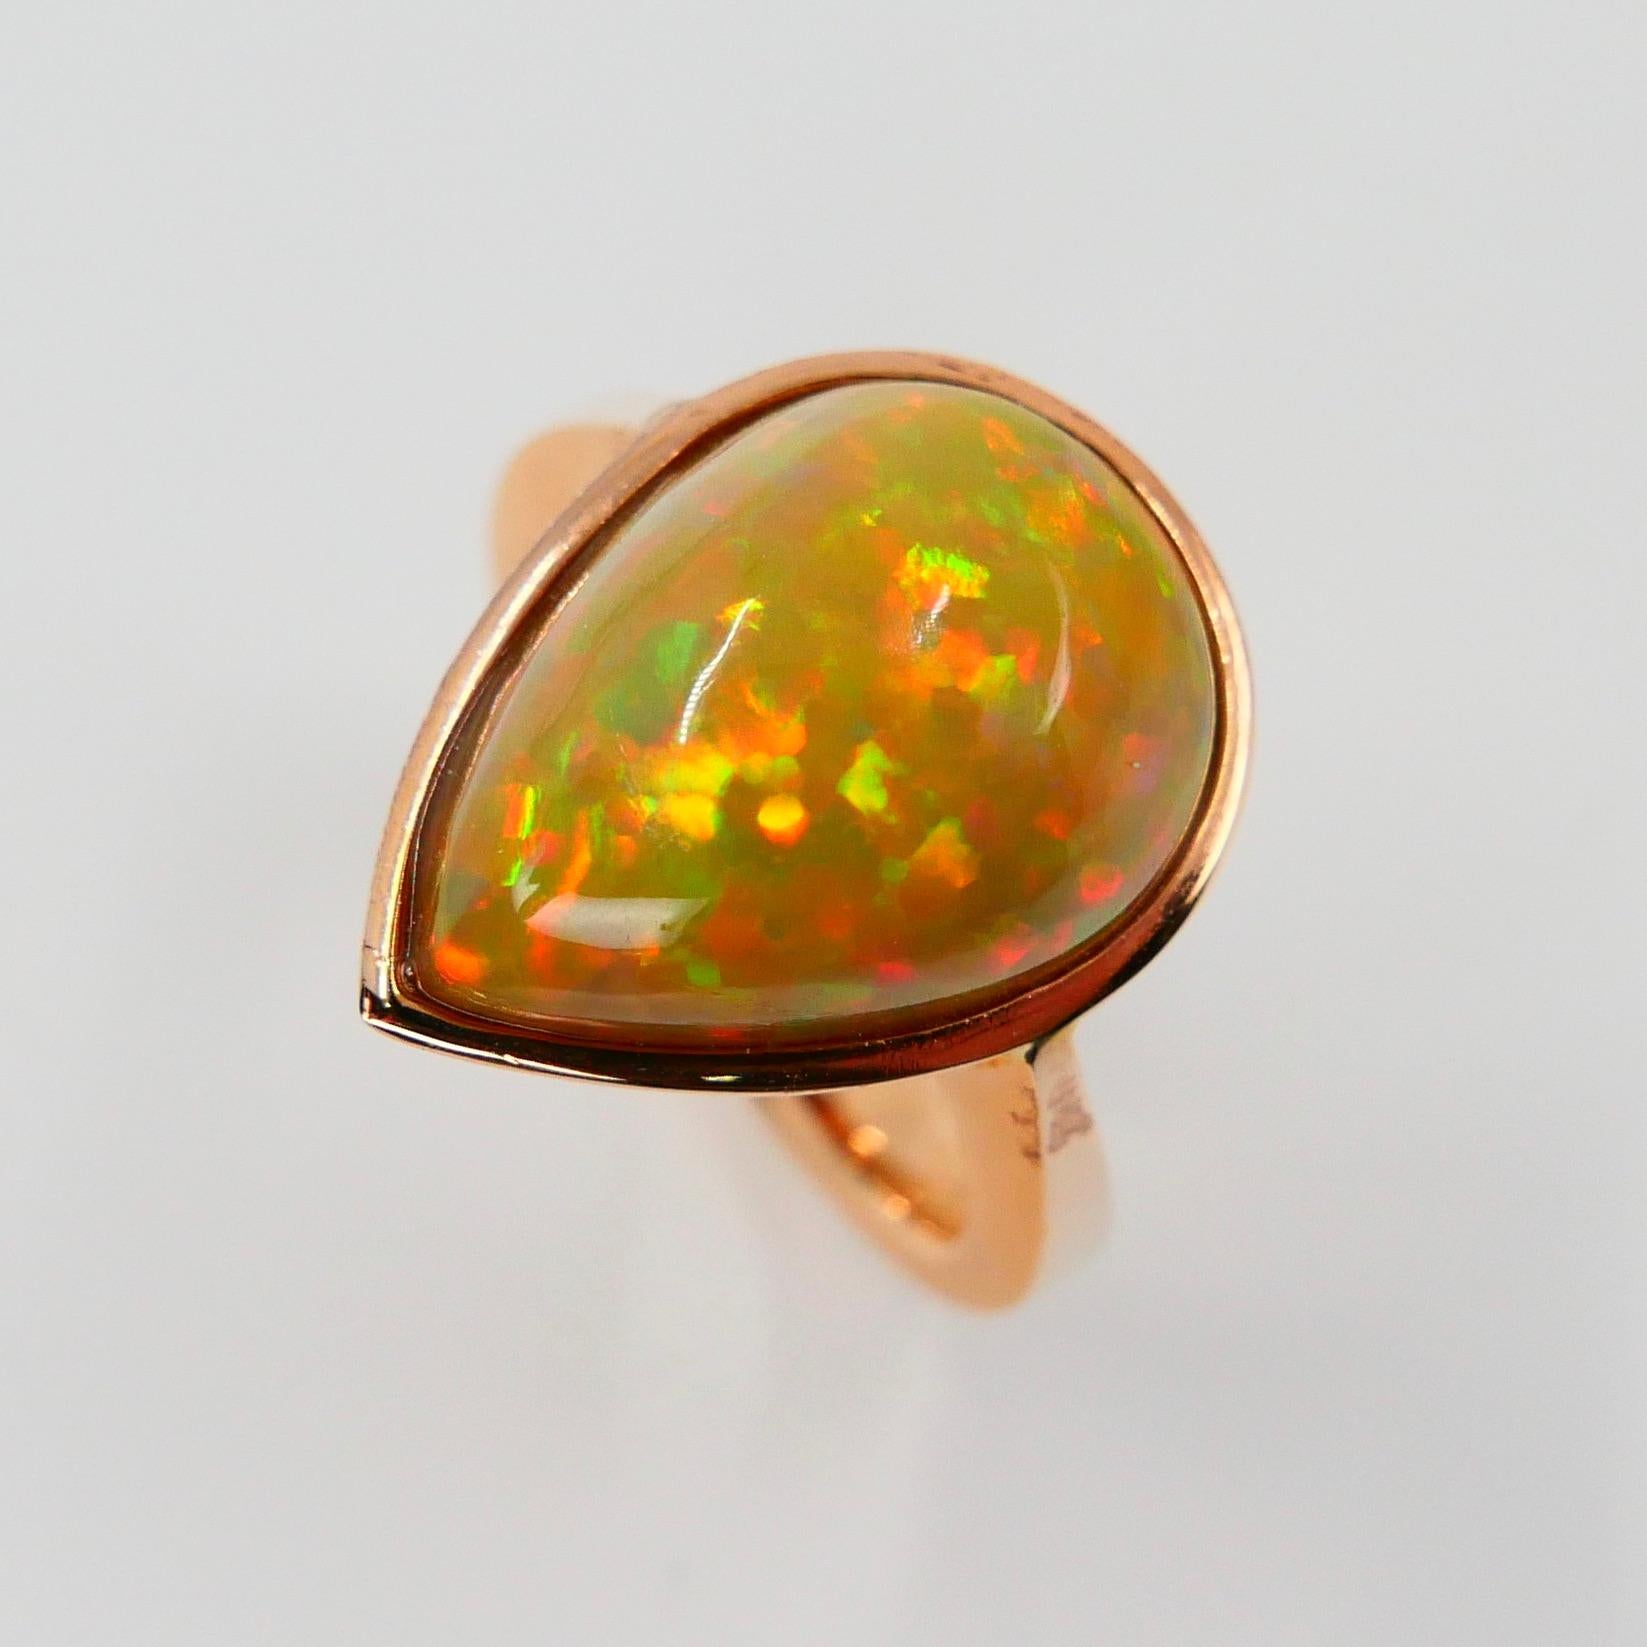 5.85 Carat Opal Ring Set in 18 Karat Gold Colorful Red, Green, Orange and Yellow 2